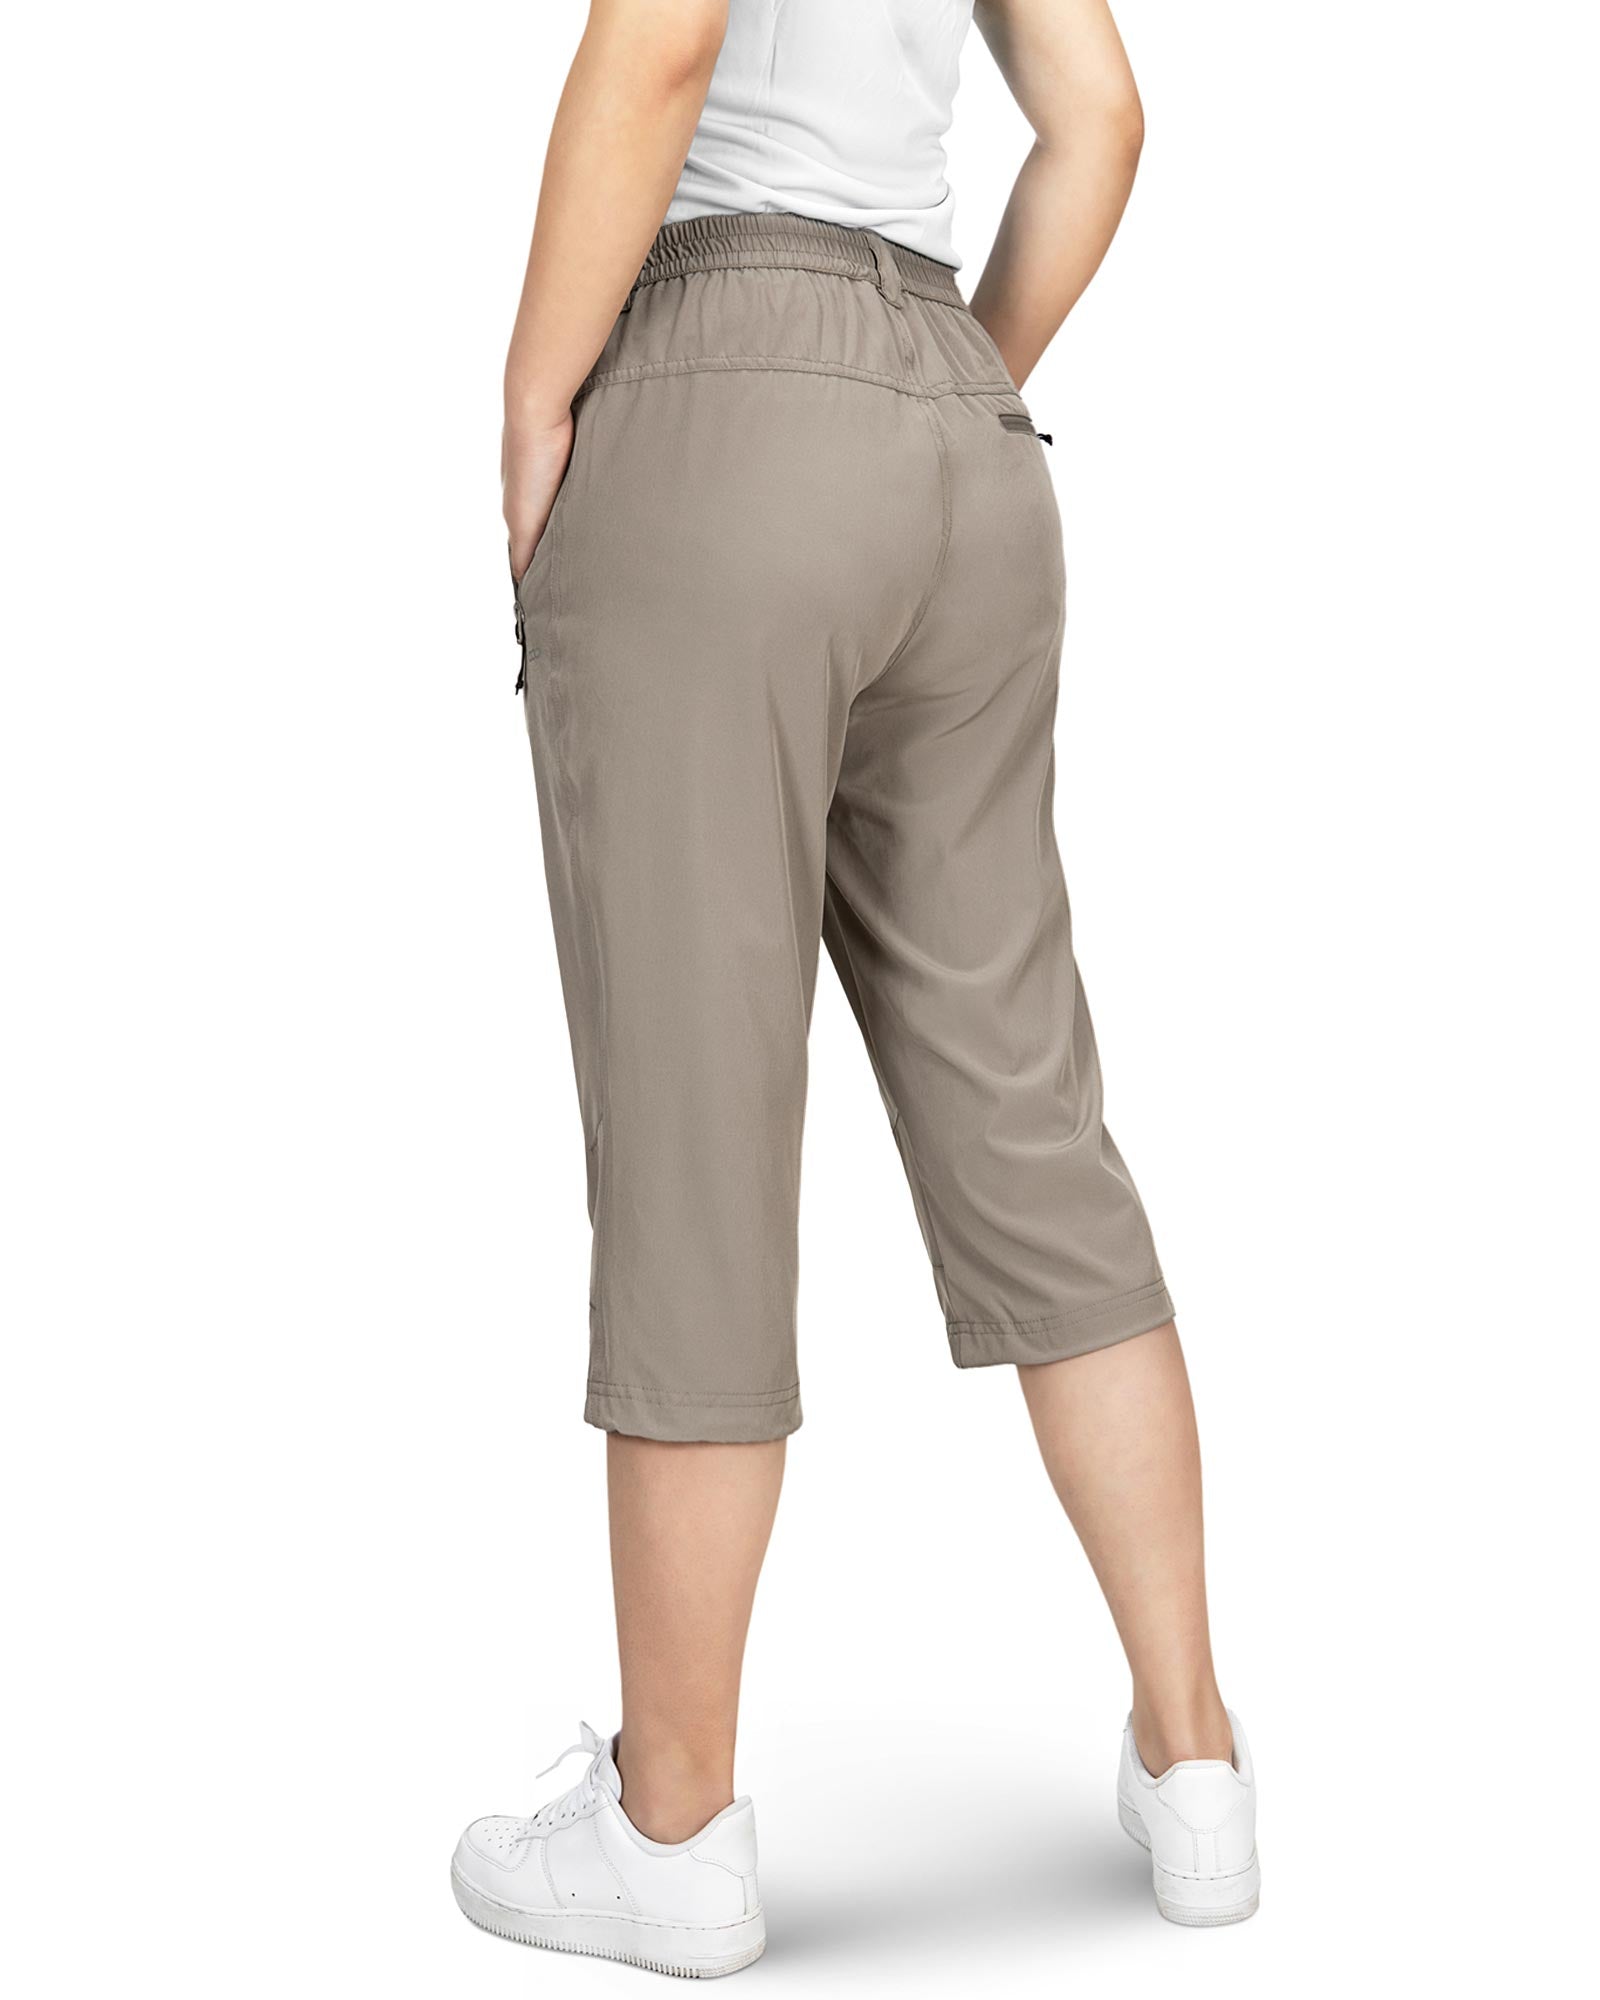 Women's Capri Golf Pants Casual Quick Dry Upf 50+ Lightweight